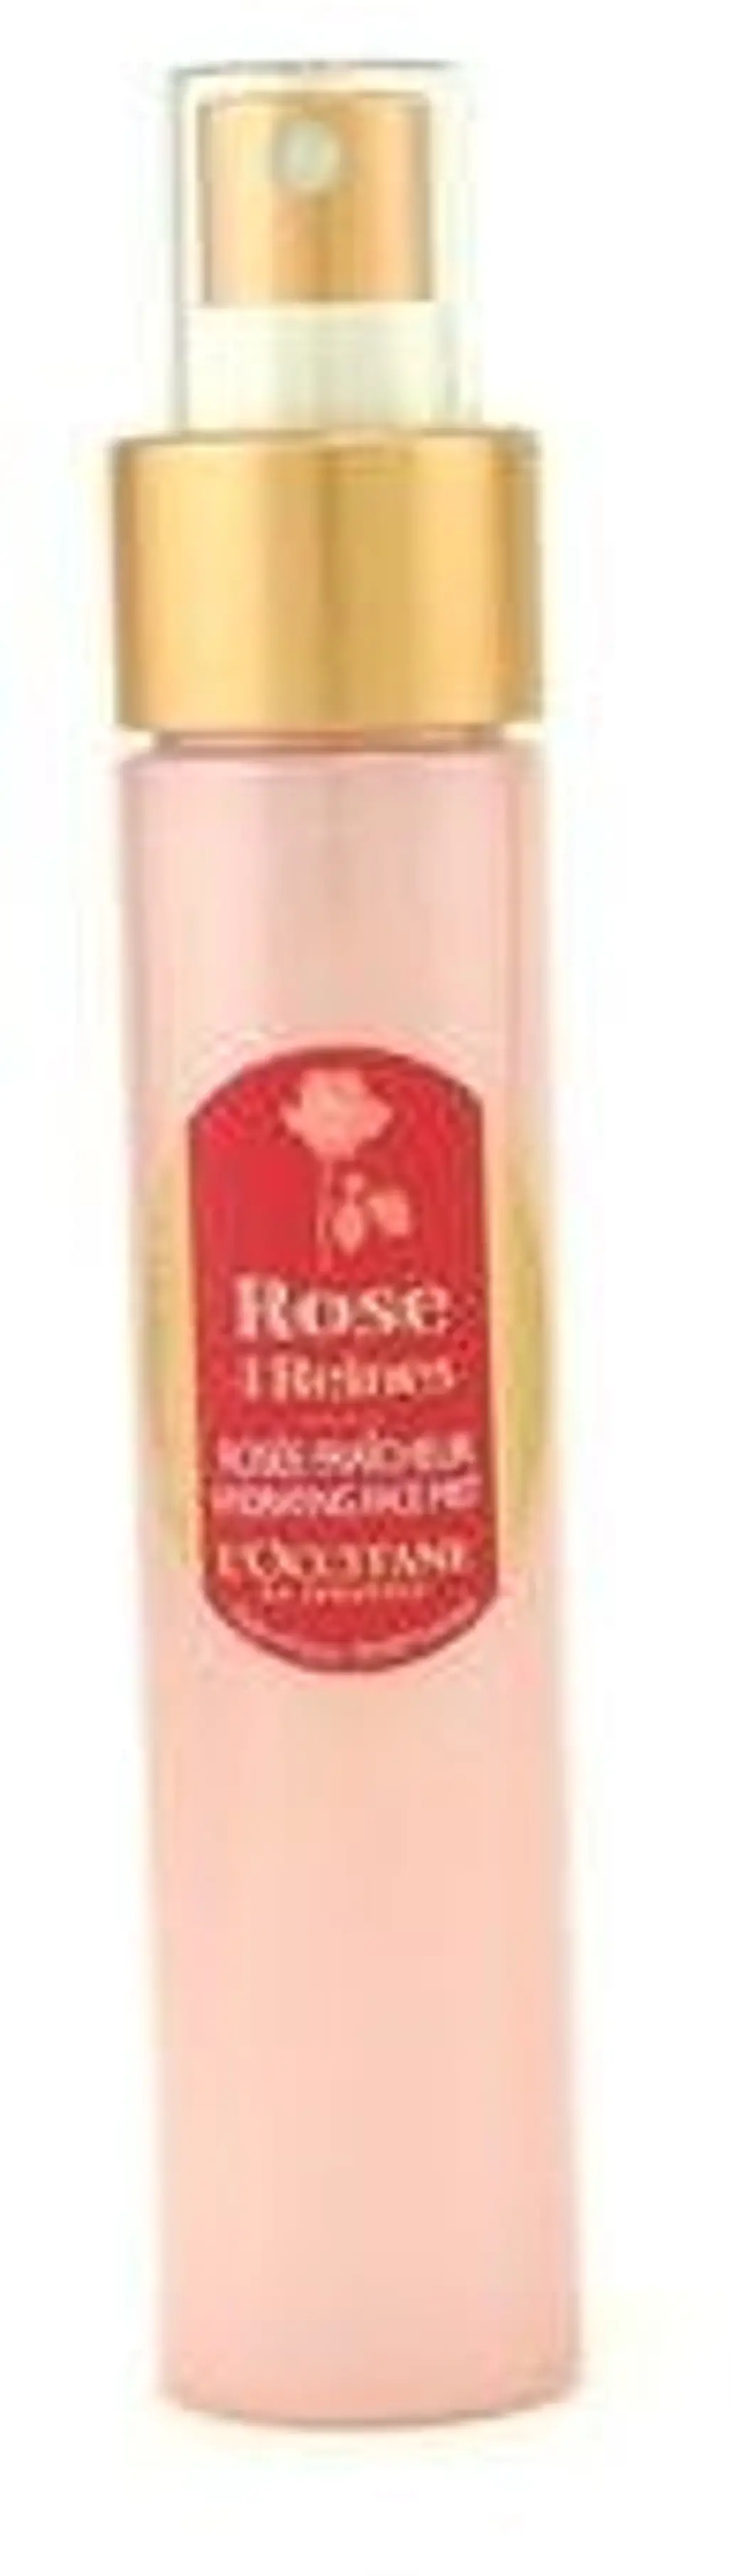 L'Occitane Rose 4 Reines Hydrating Face Mist